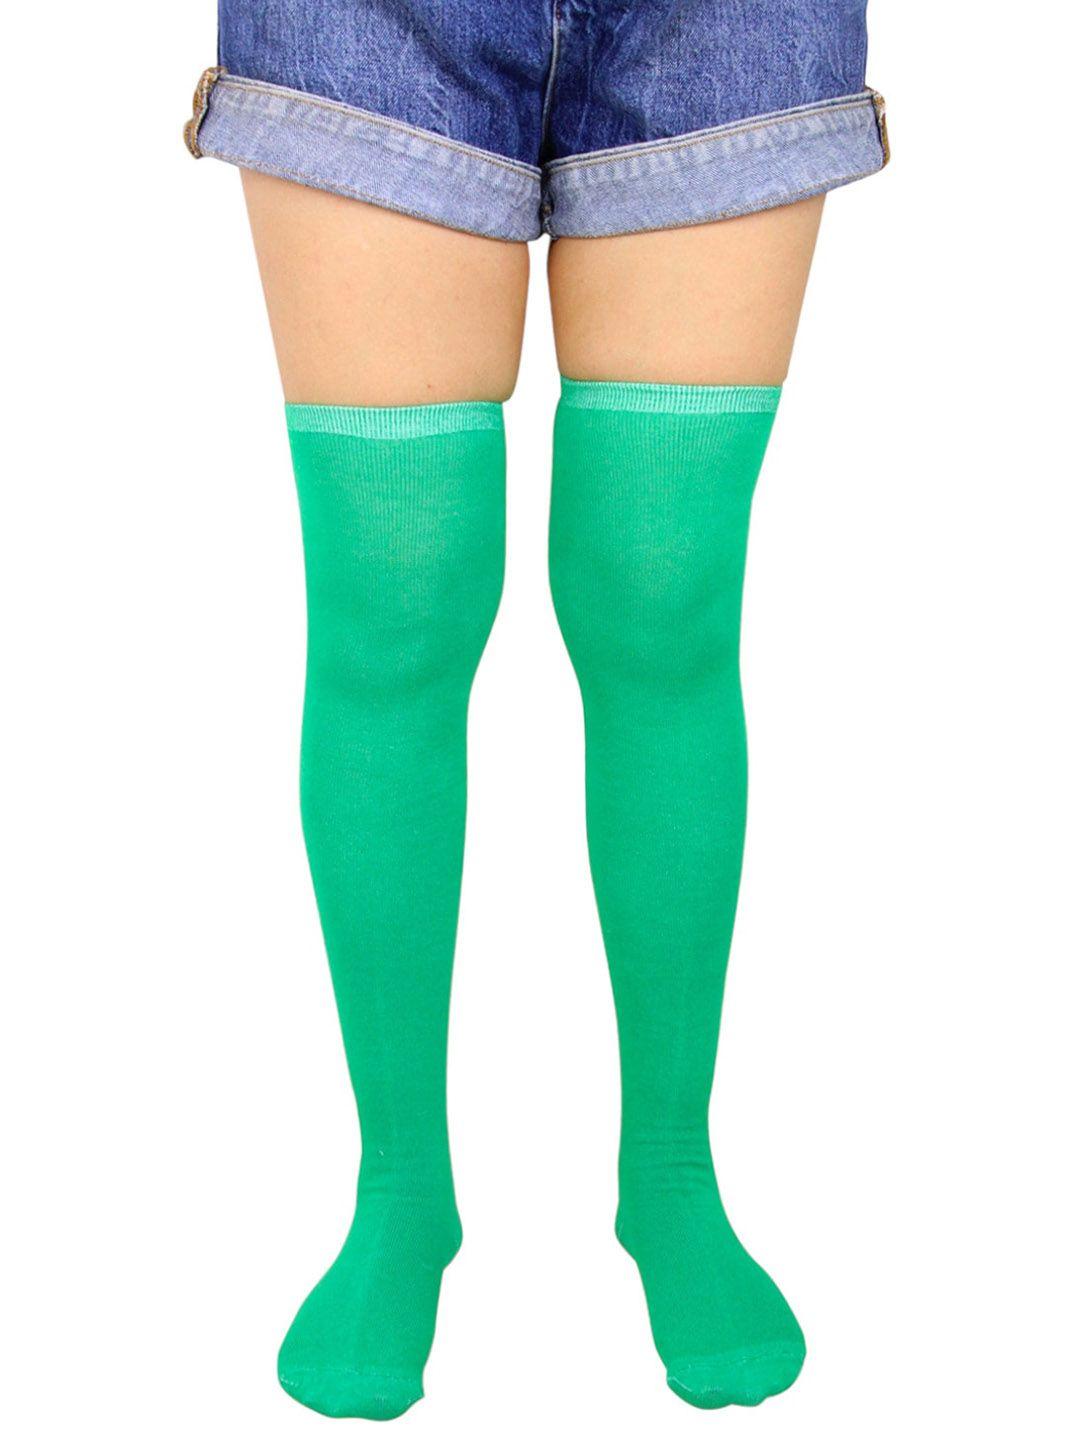 baesd thigh-high stockings